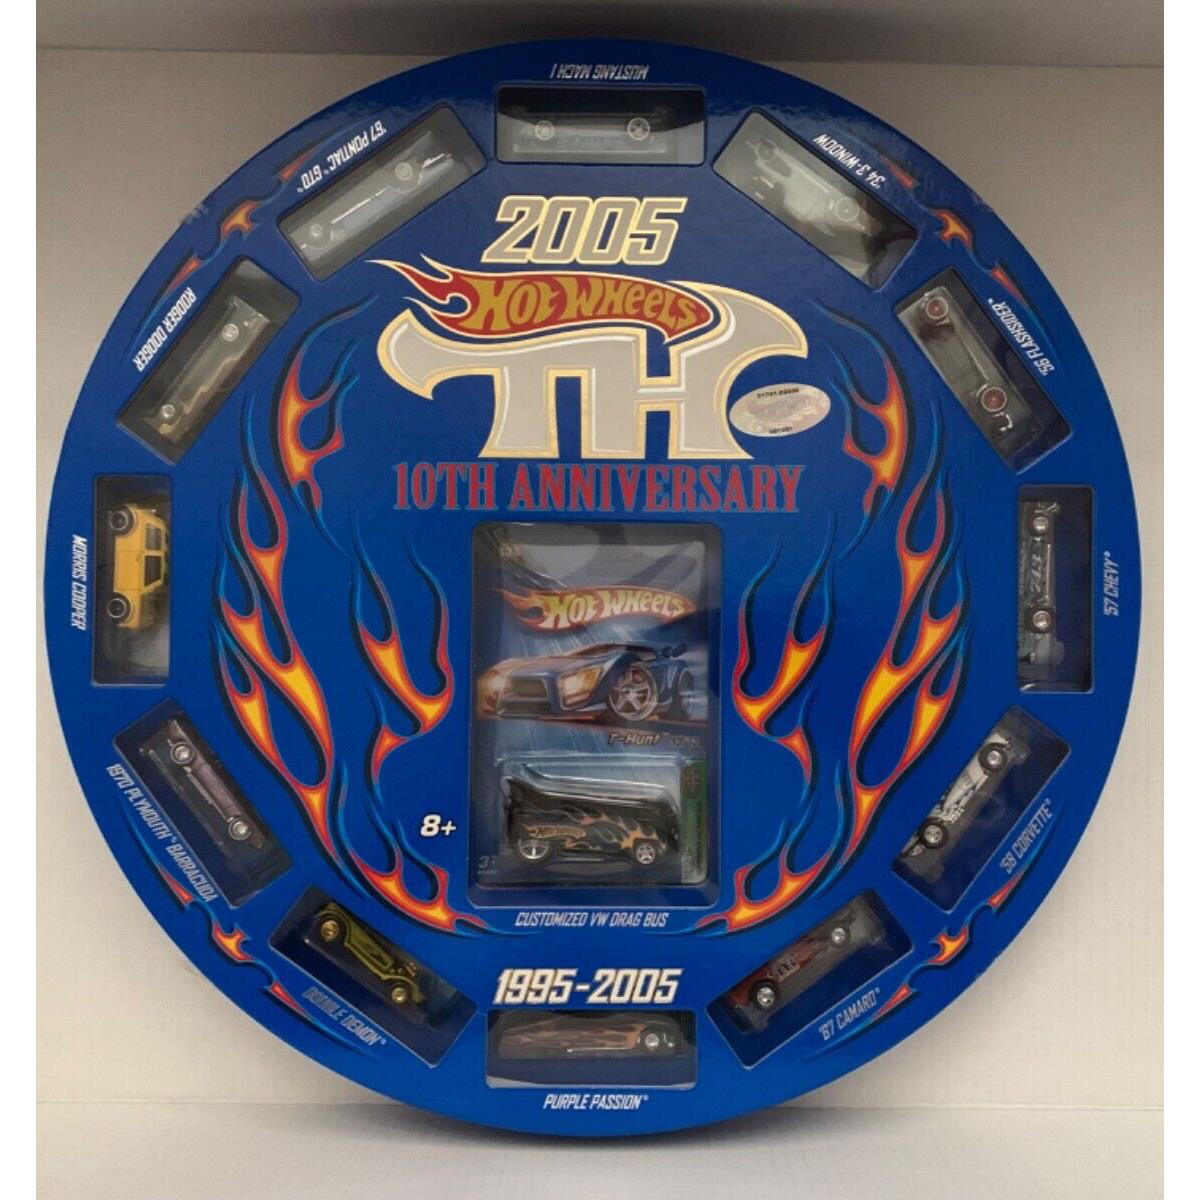 2005 Hot Wheels Treasure Hunt 10th Anniversary Set Rlc Limited Edition 1 Of 2500